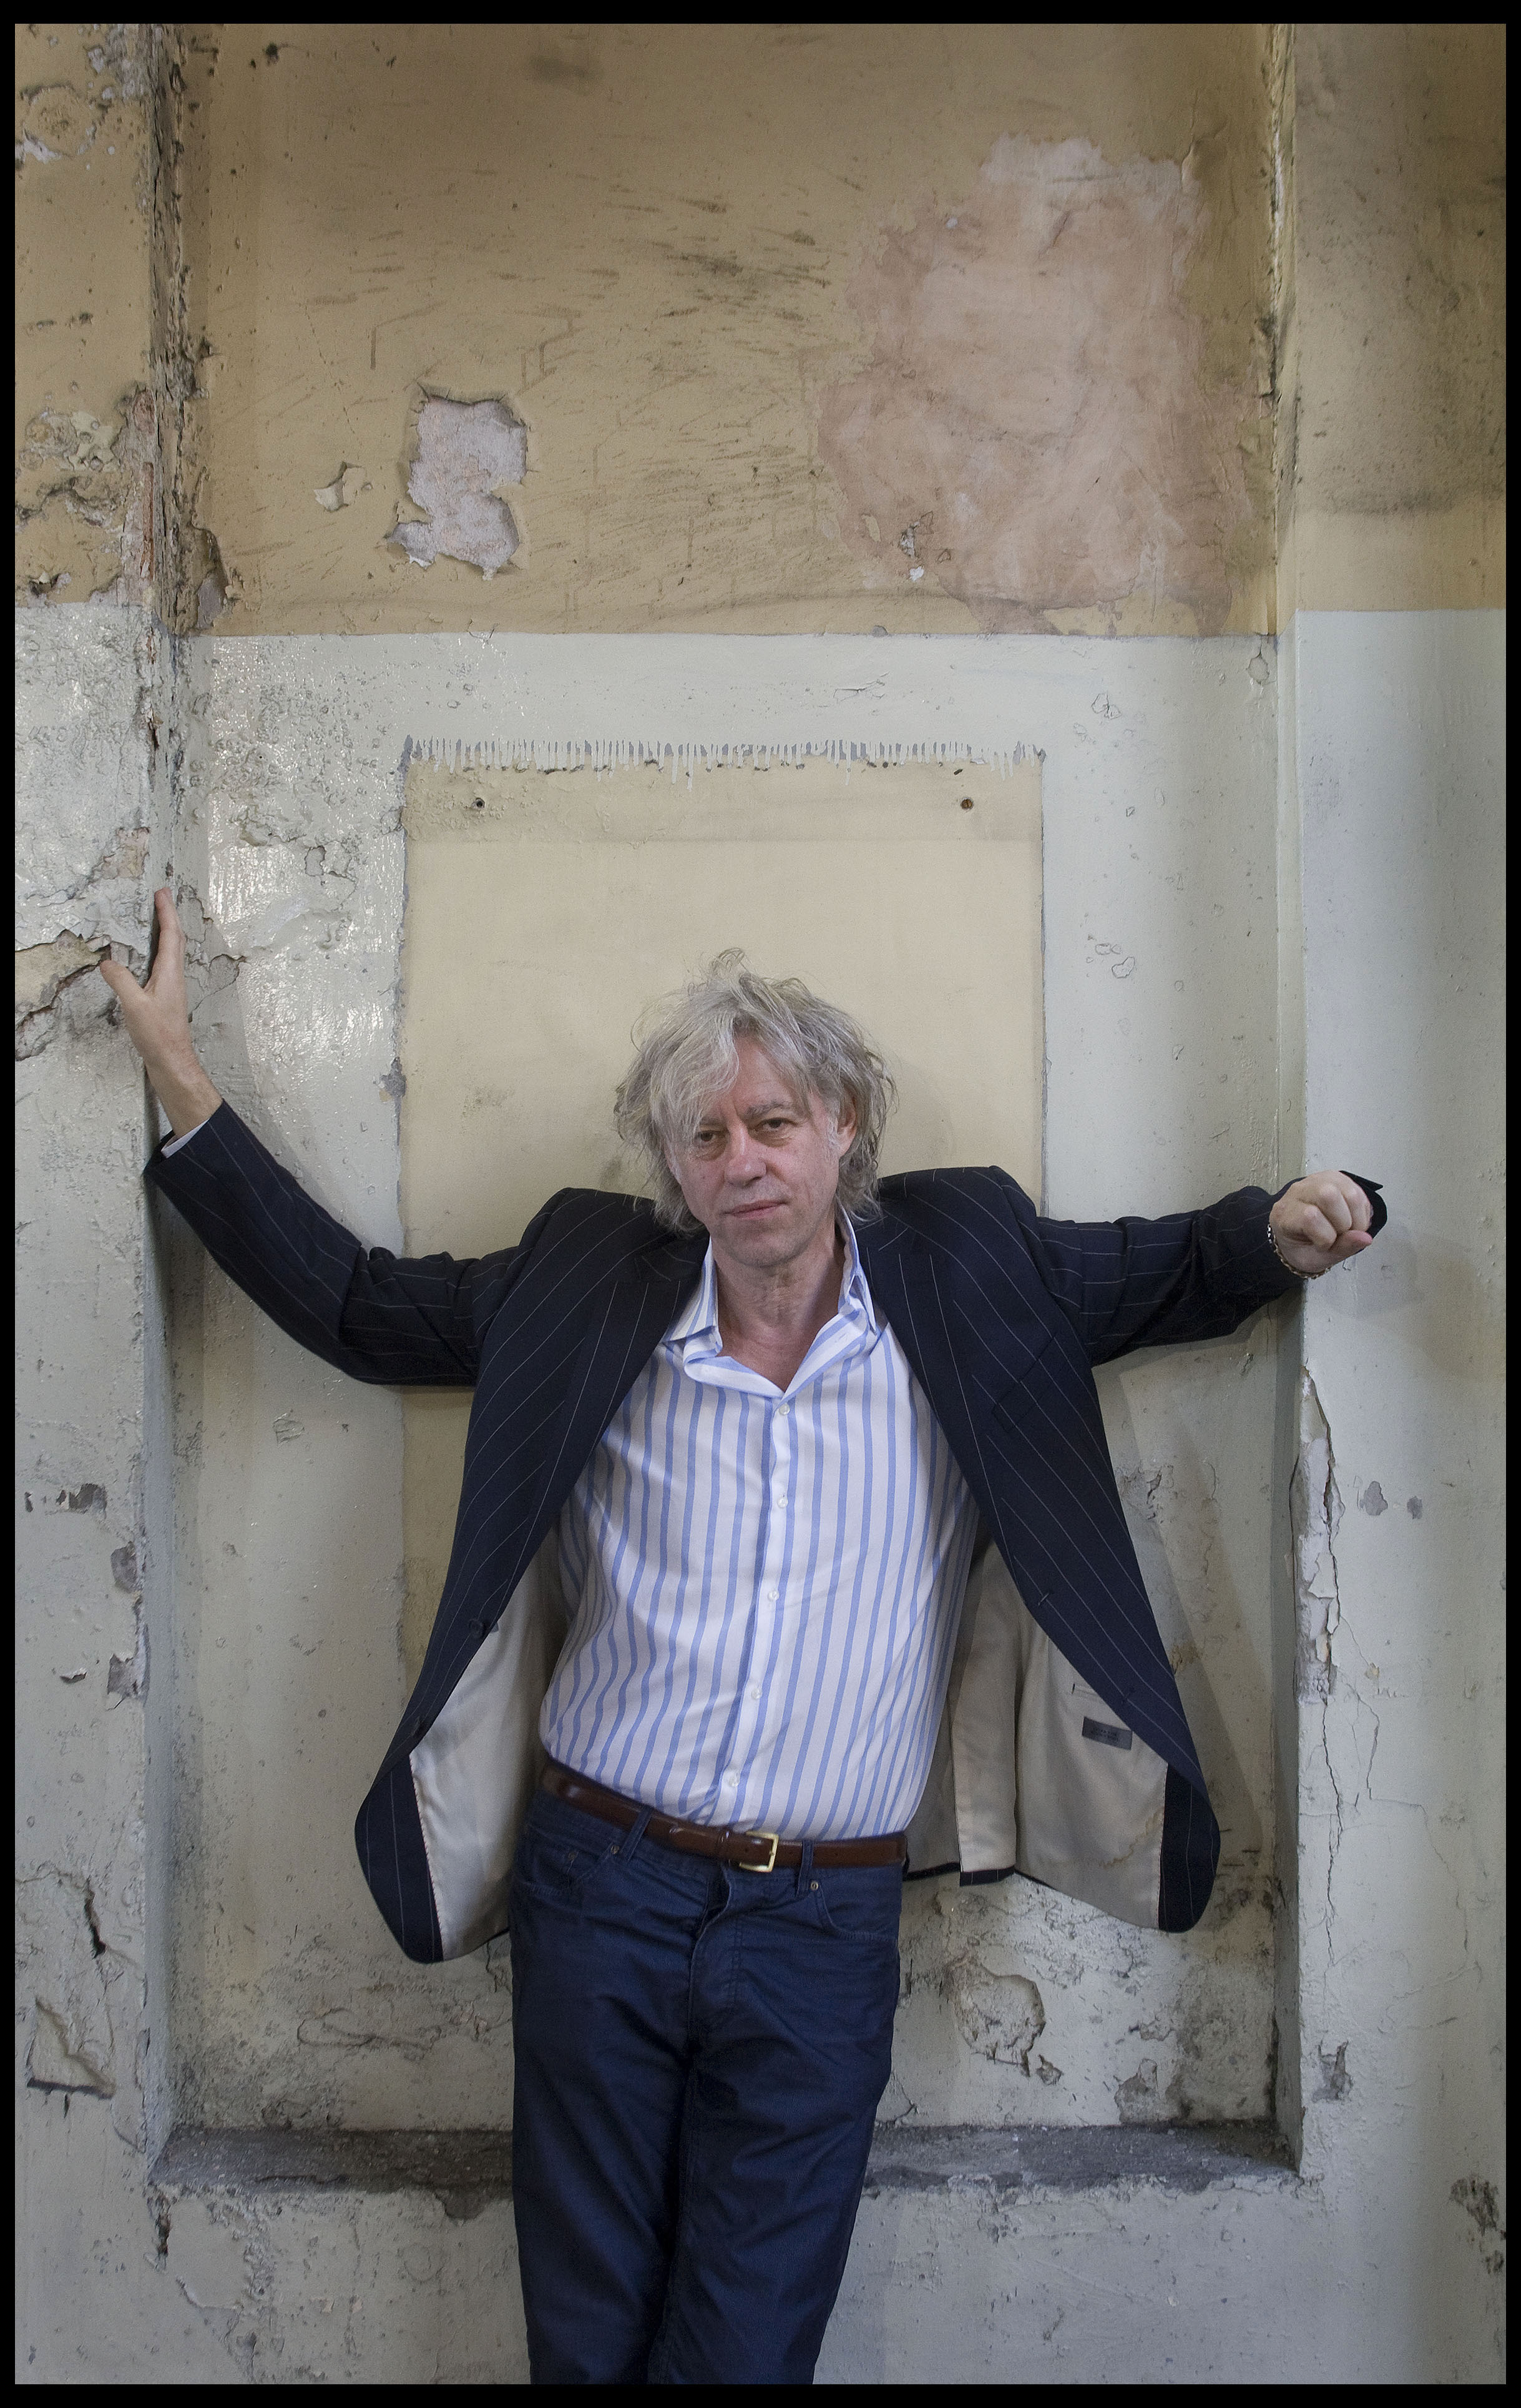 Sir Bob Geldof, political activist, musician